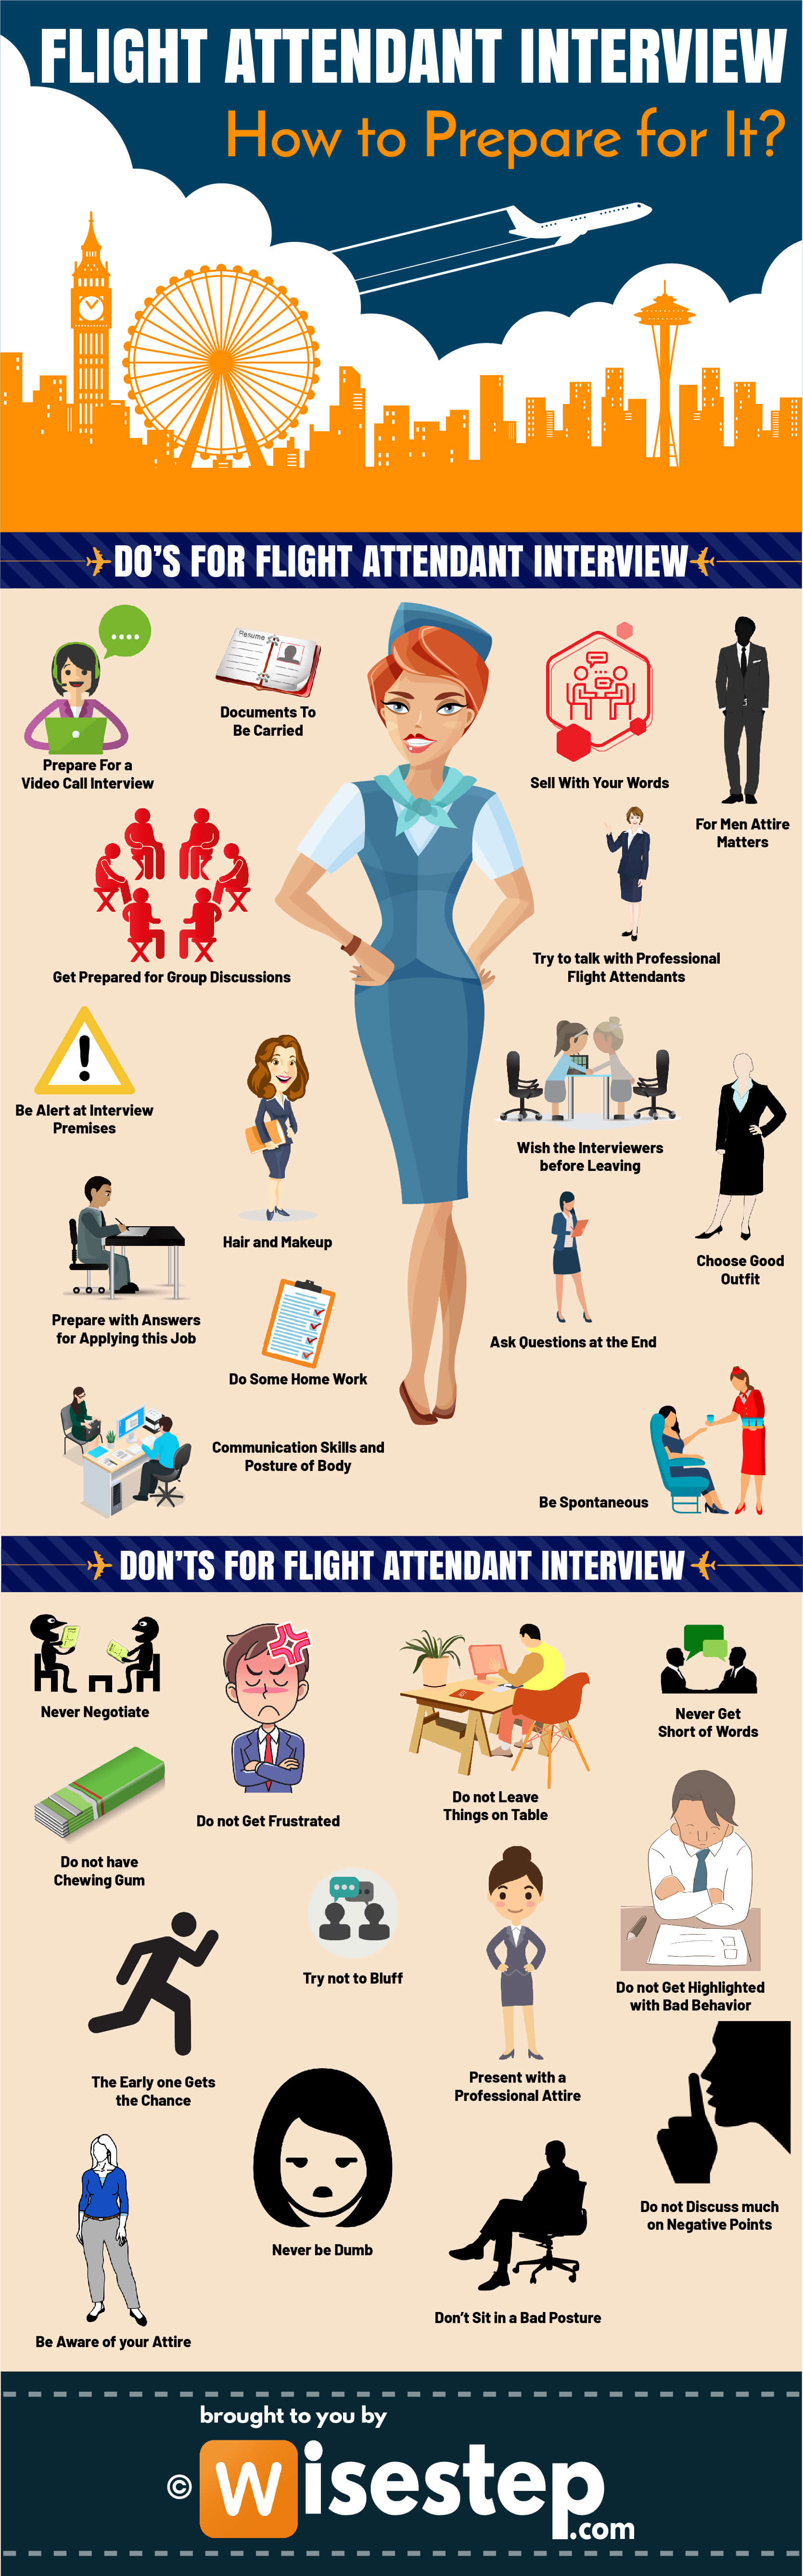 Flight Attendant interview